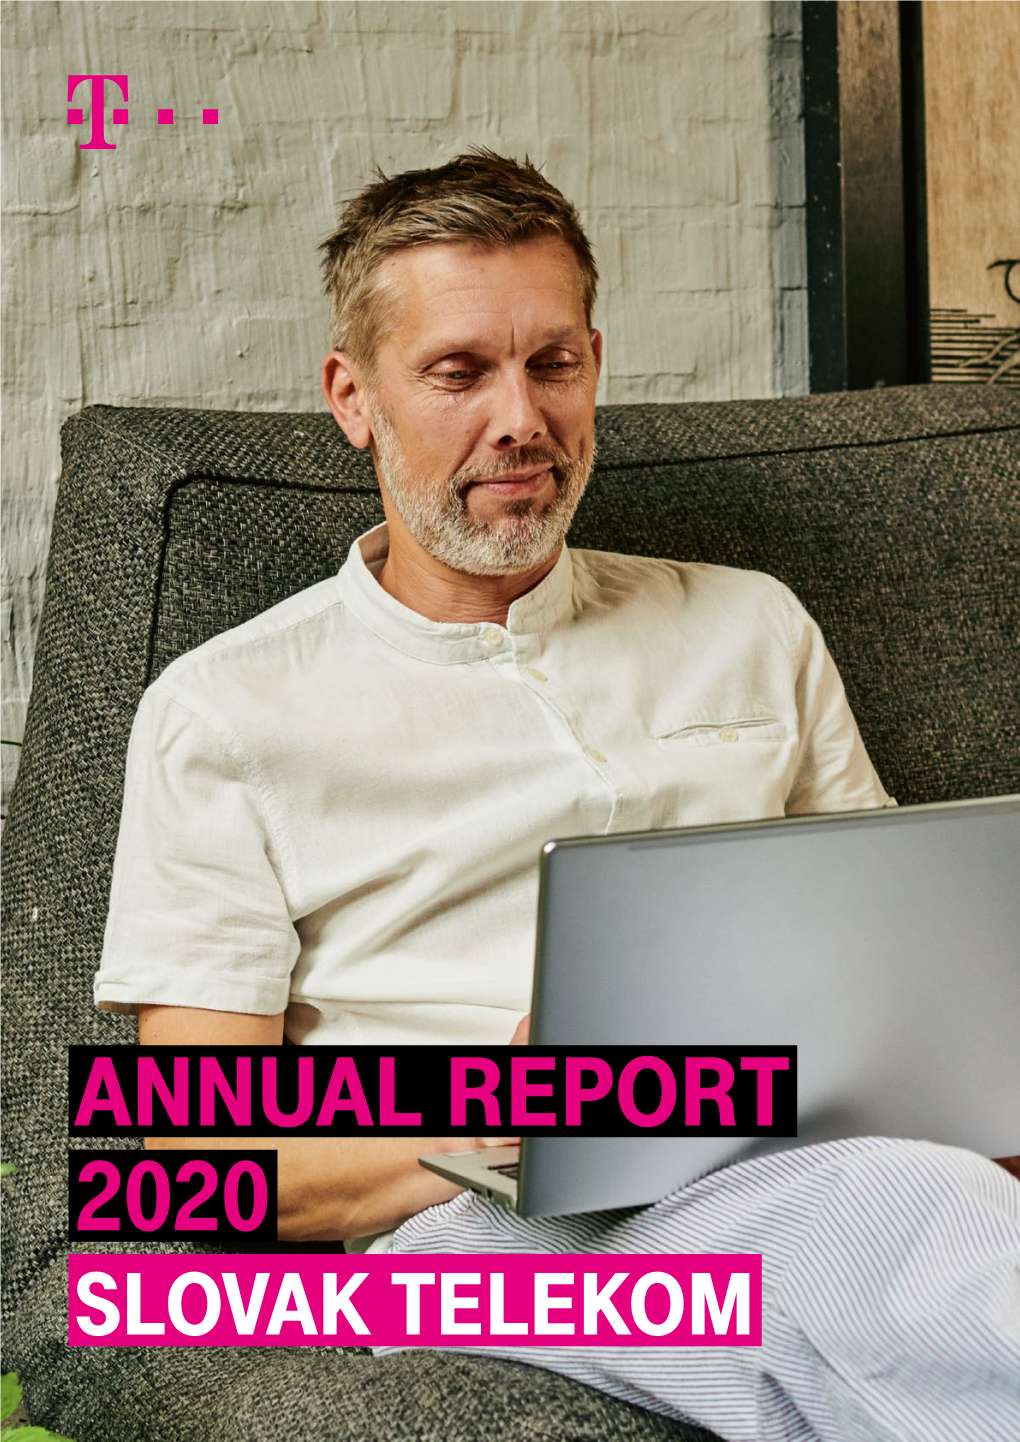 Annual Report 2020 Slovak Telekom Content